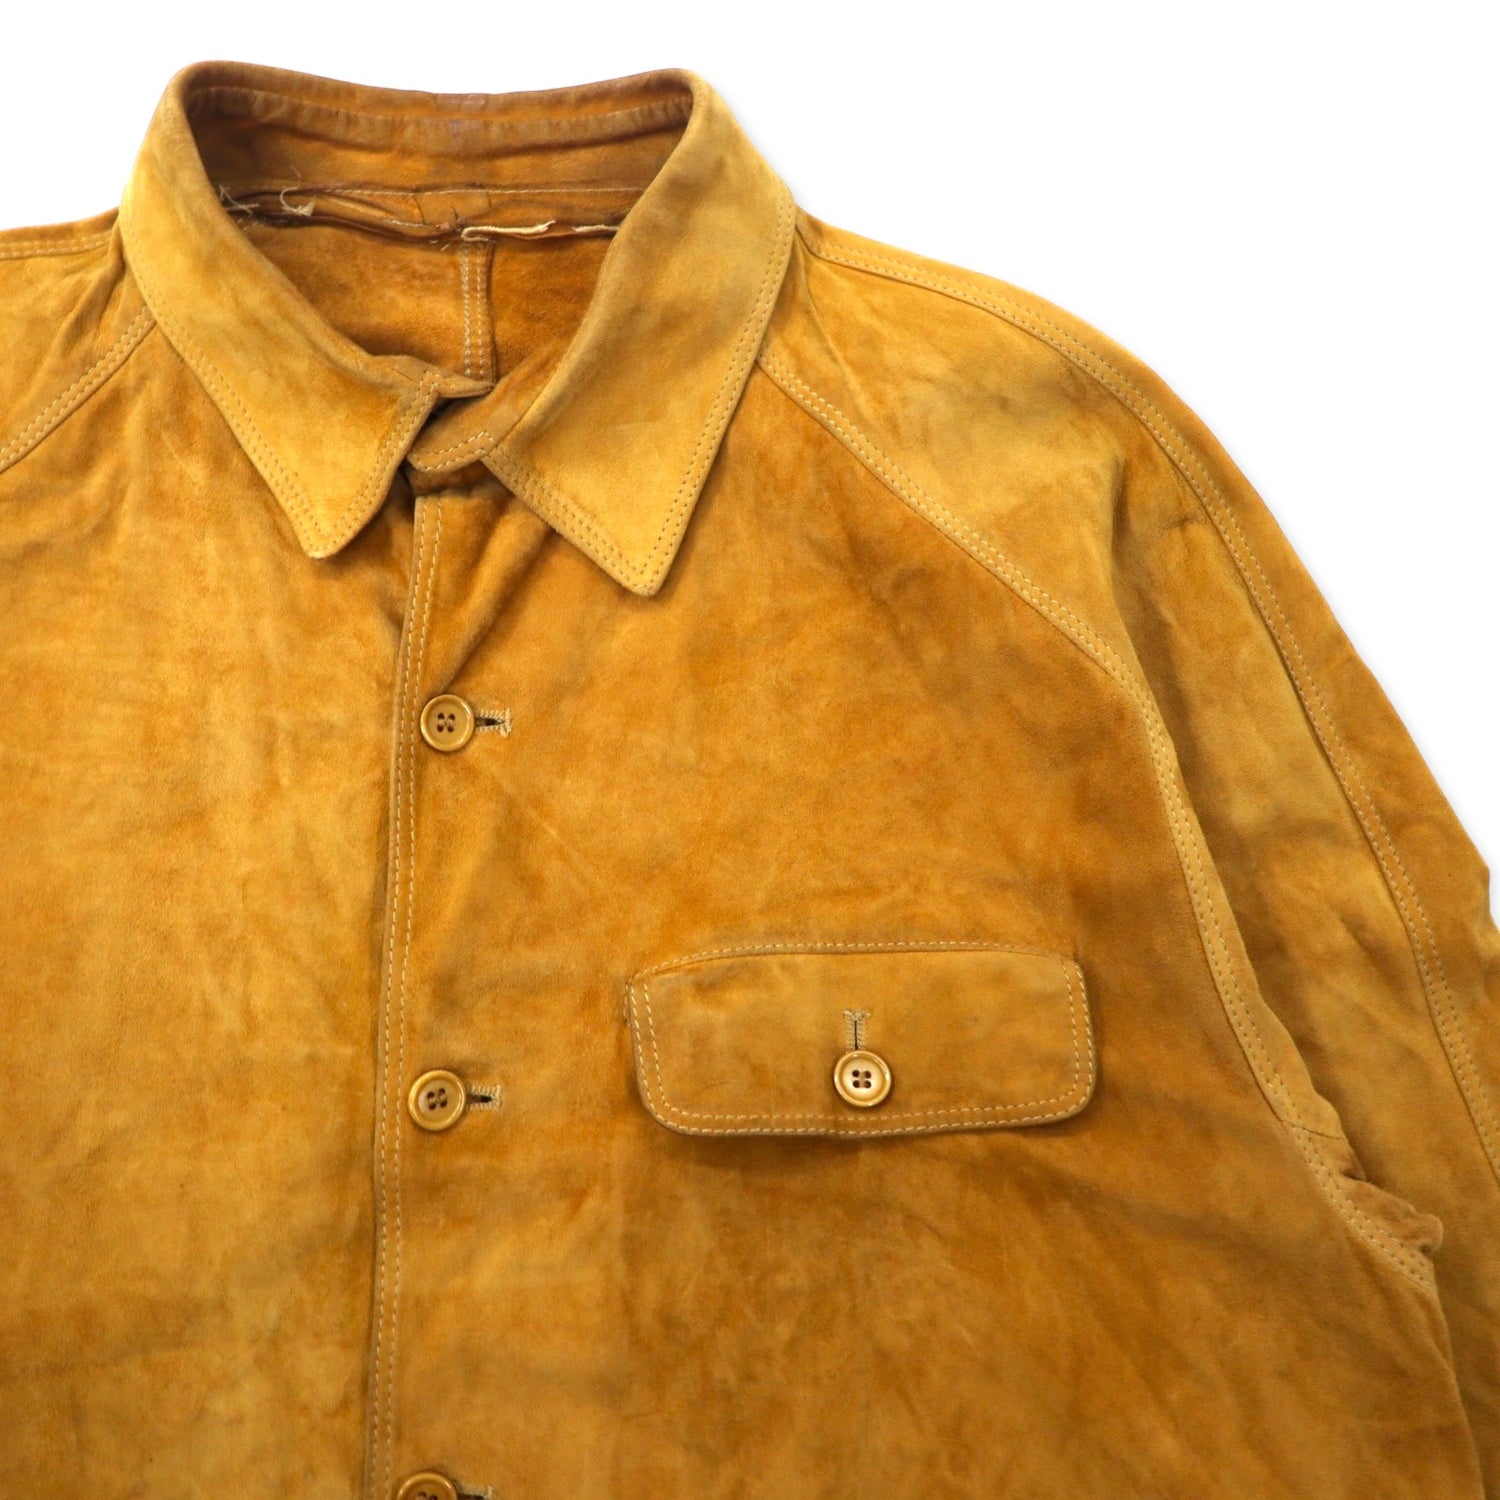 Vintage Suede Leather Shirt スエードレザー シャツジャケット L 